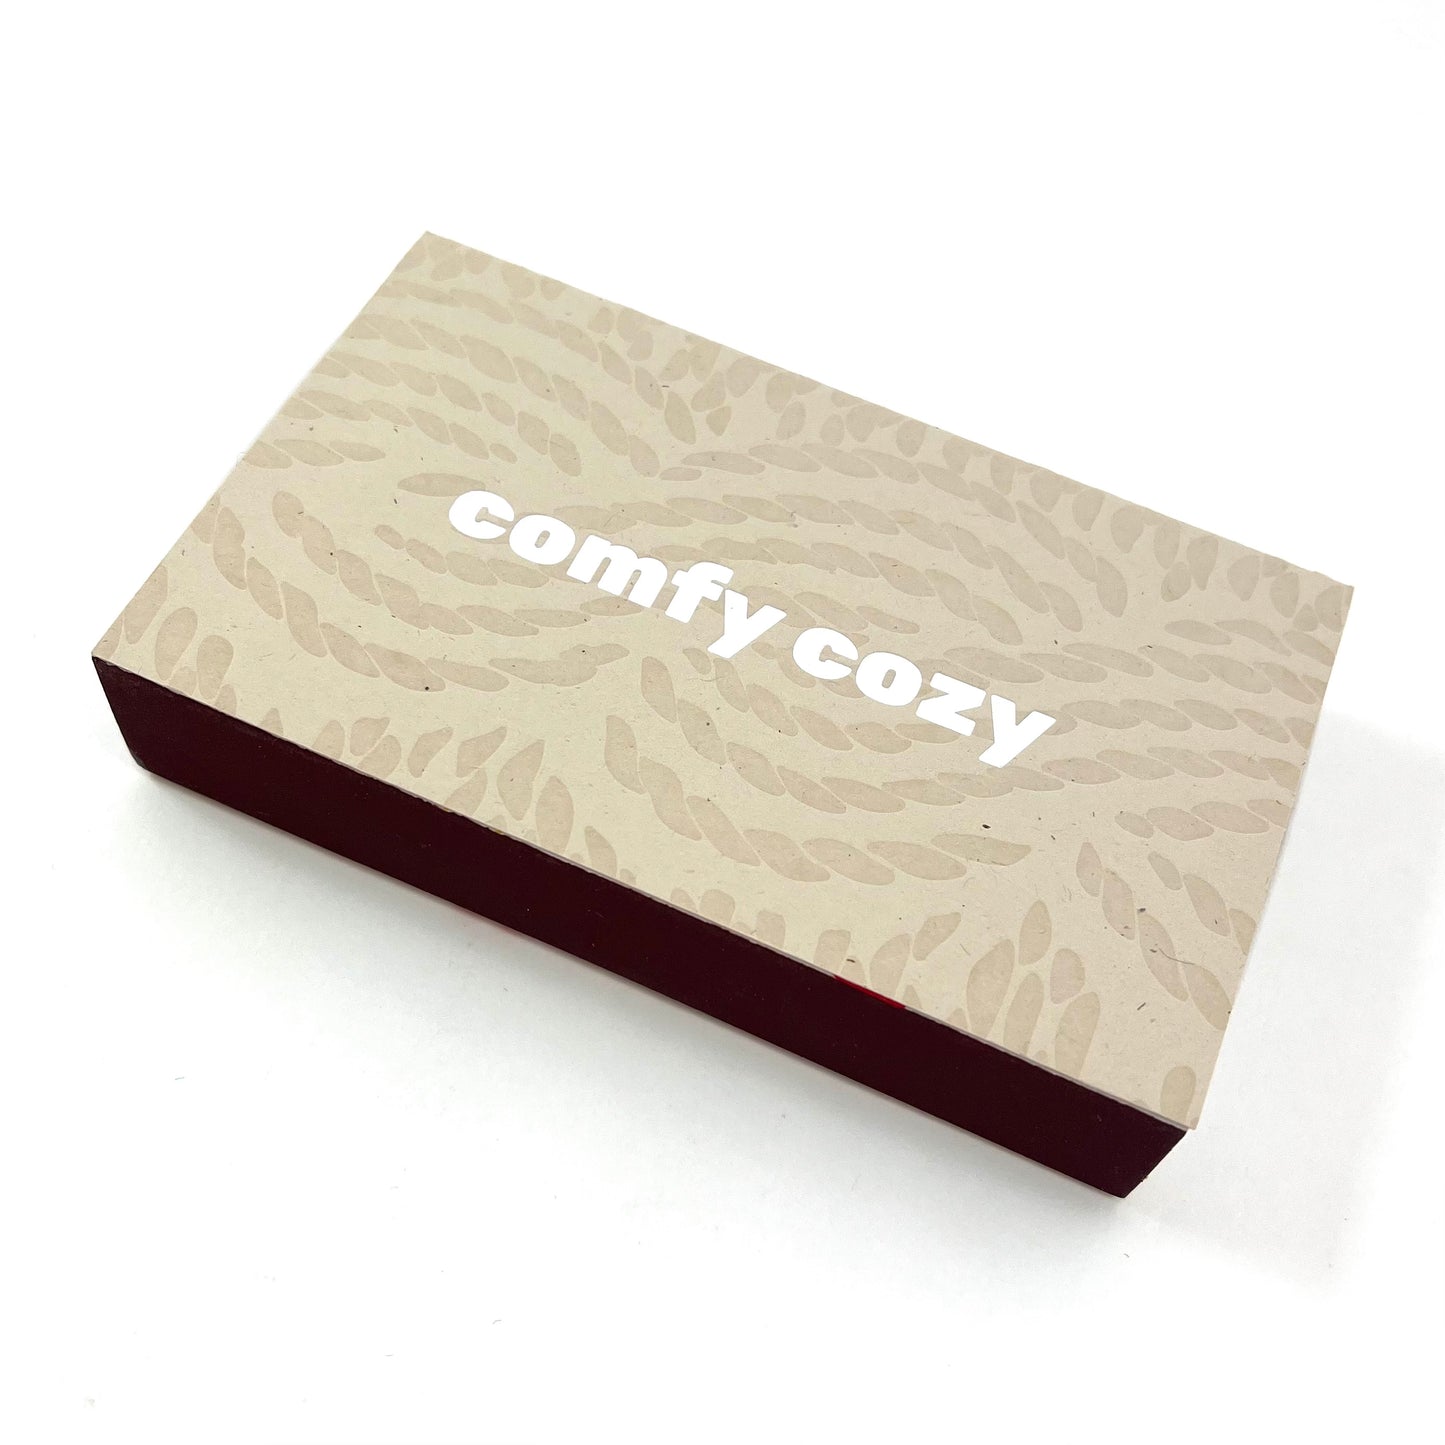 Comfy Cozy Matchbox